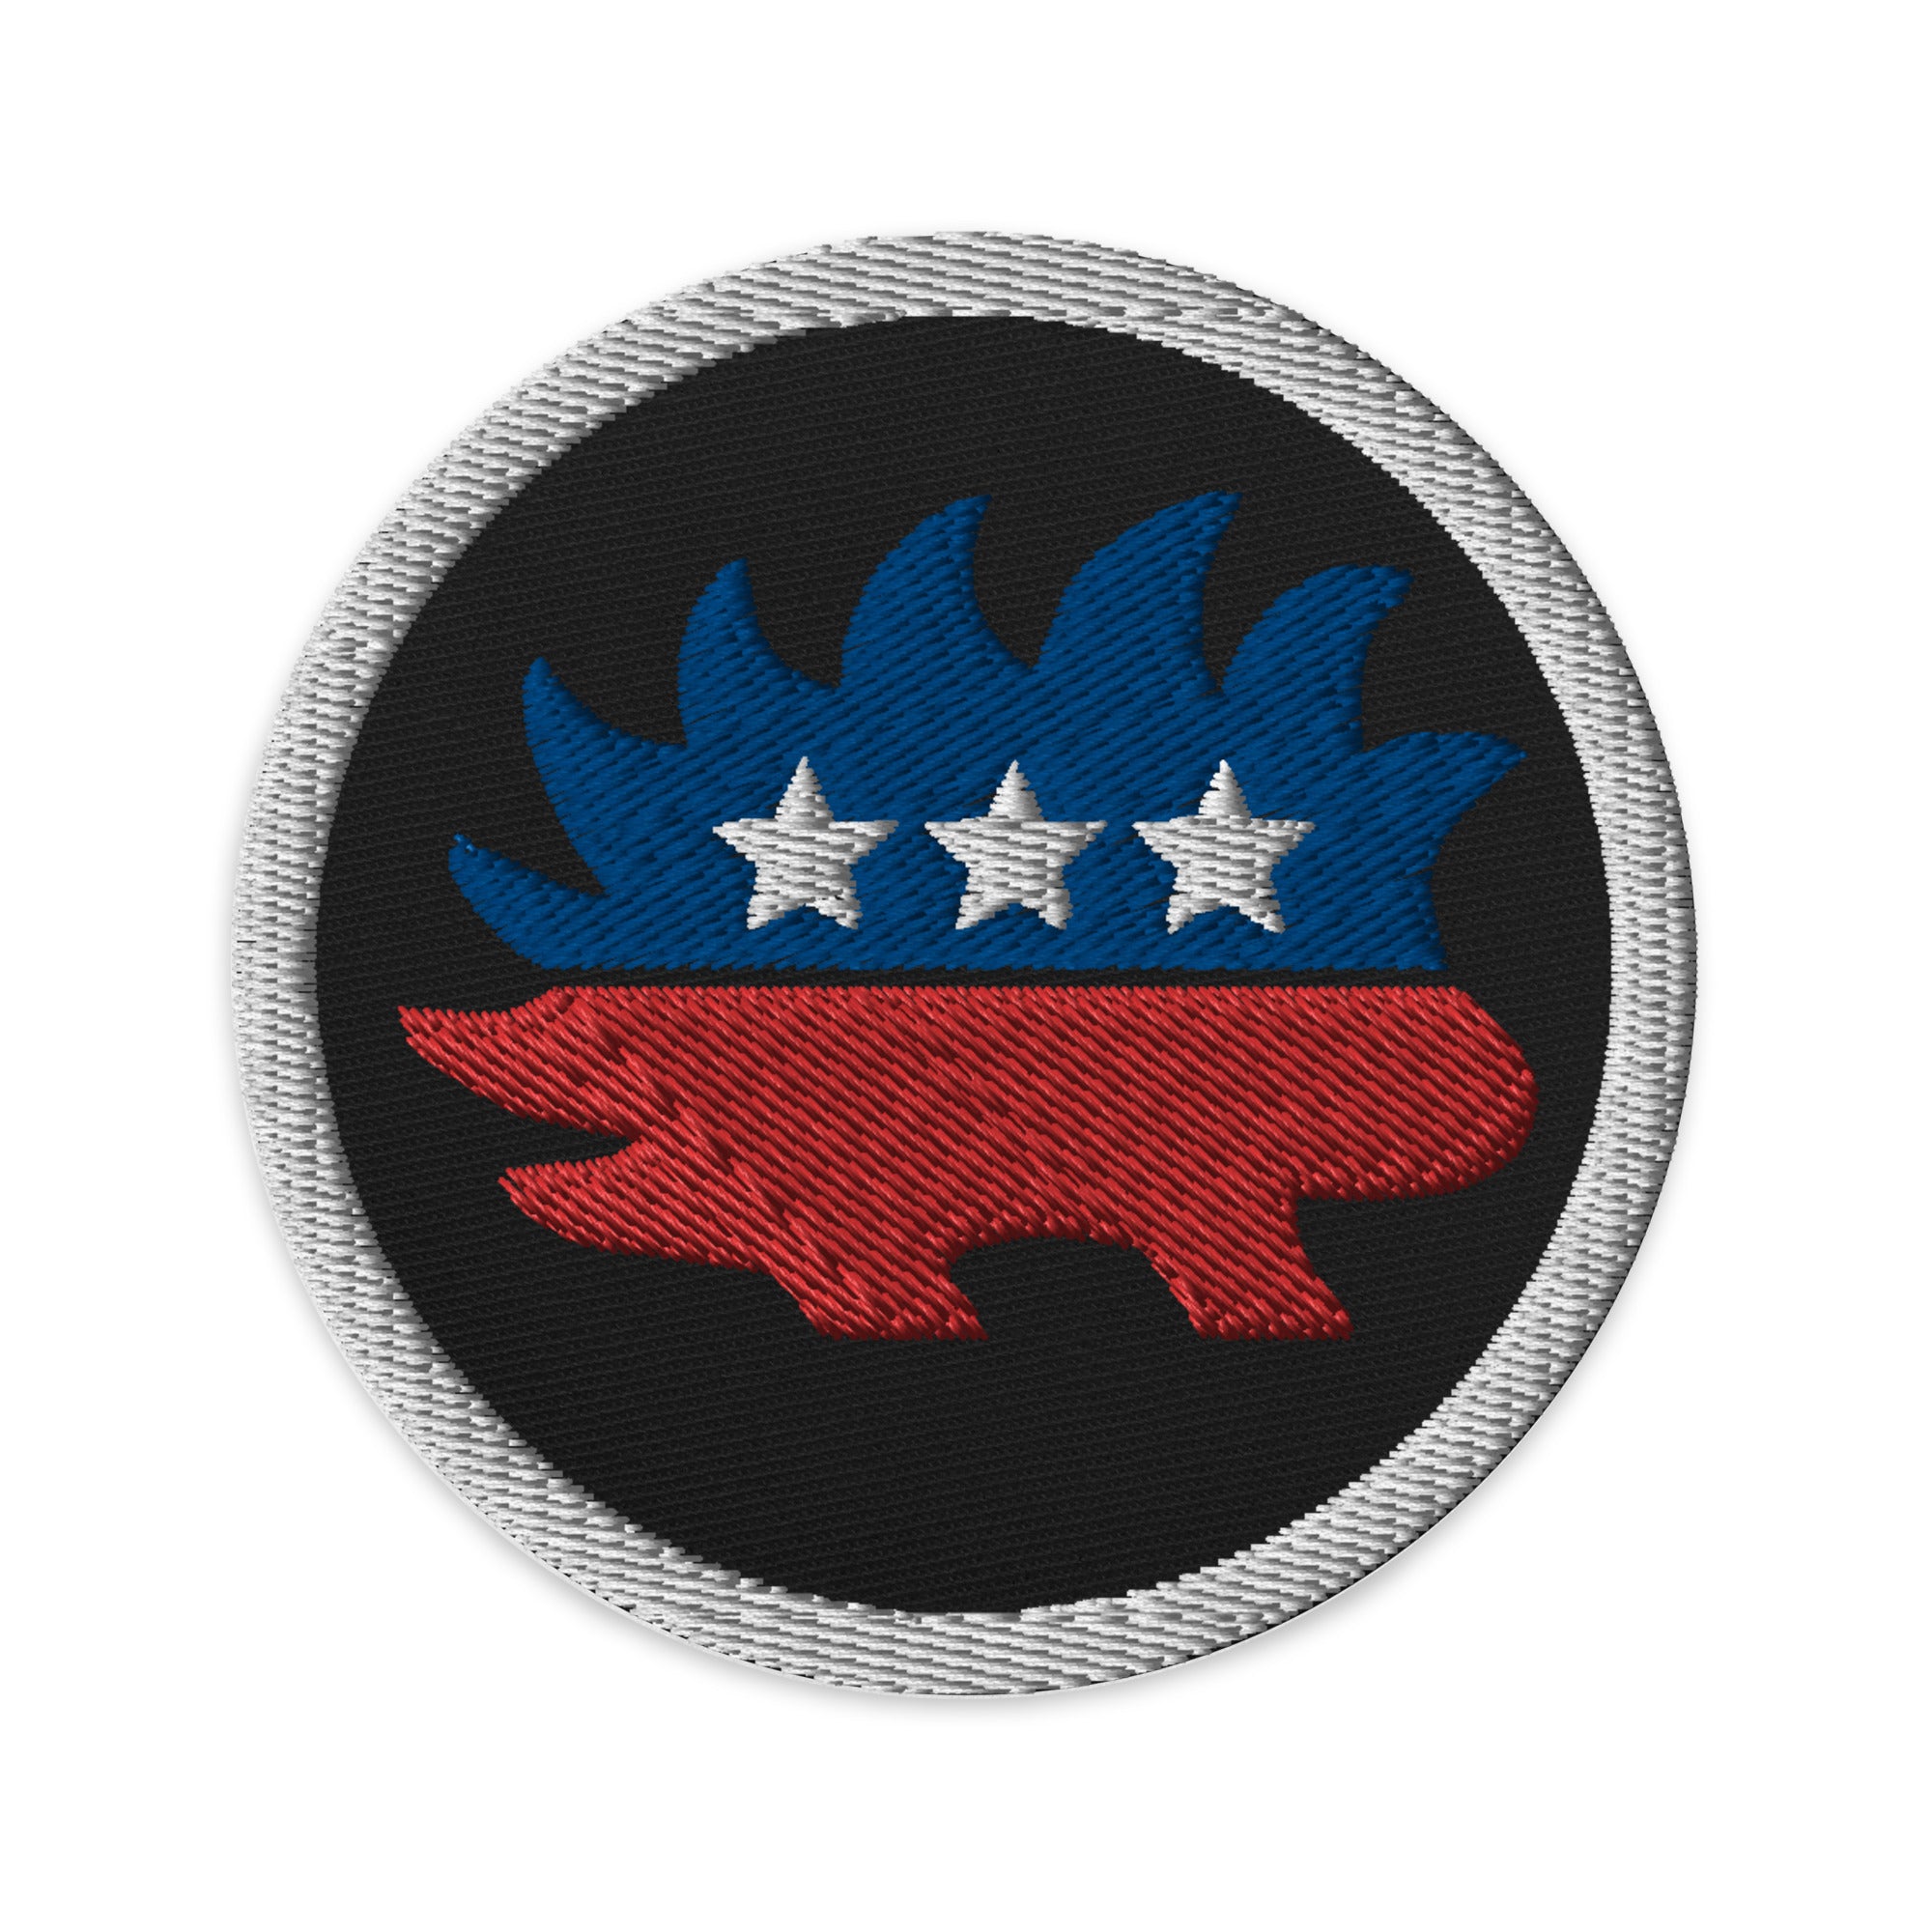 libertarian mascot